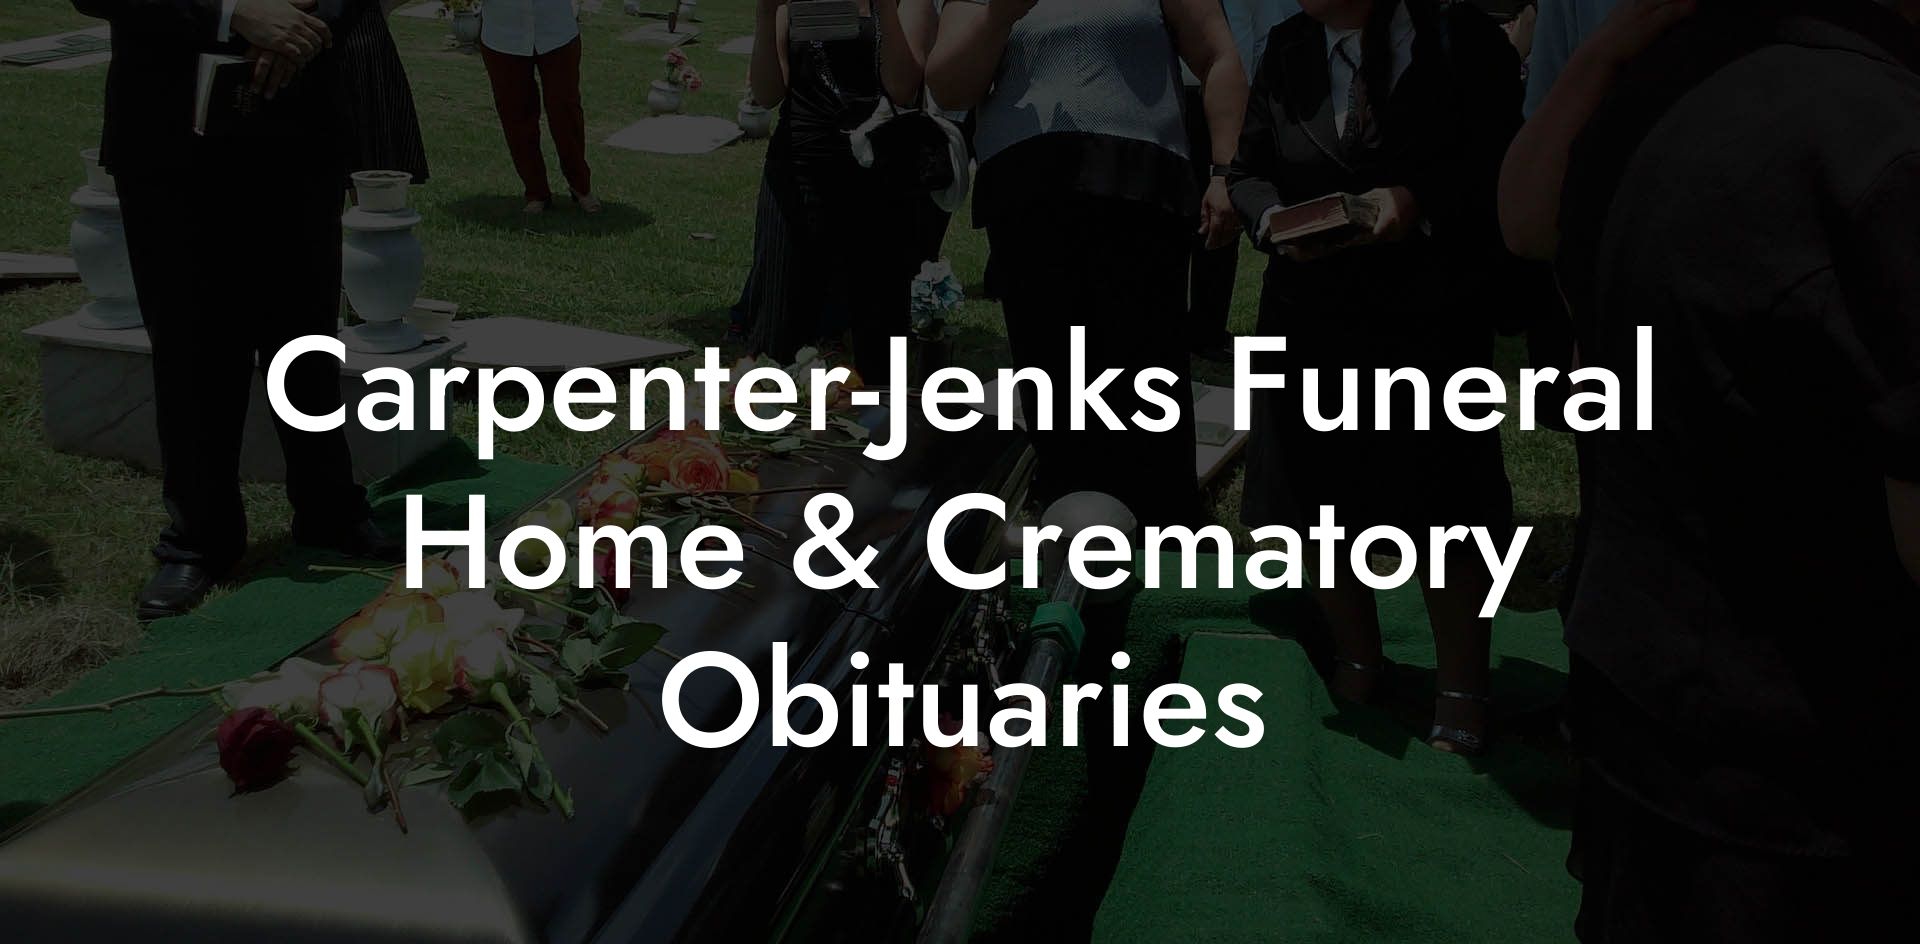 Carpenter-Jenks Funeral Home & Crematory Obituaries